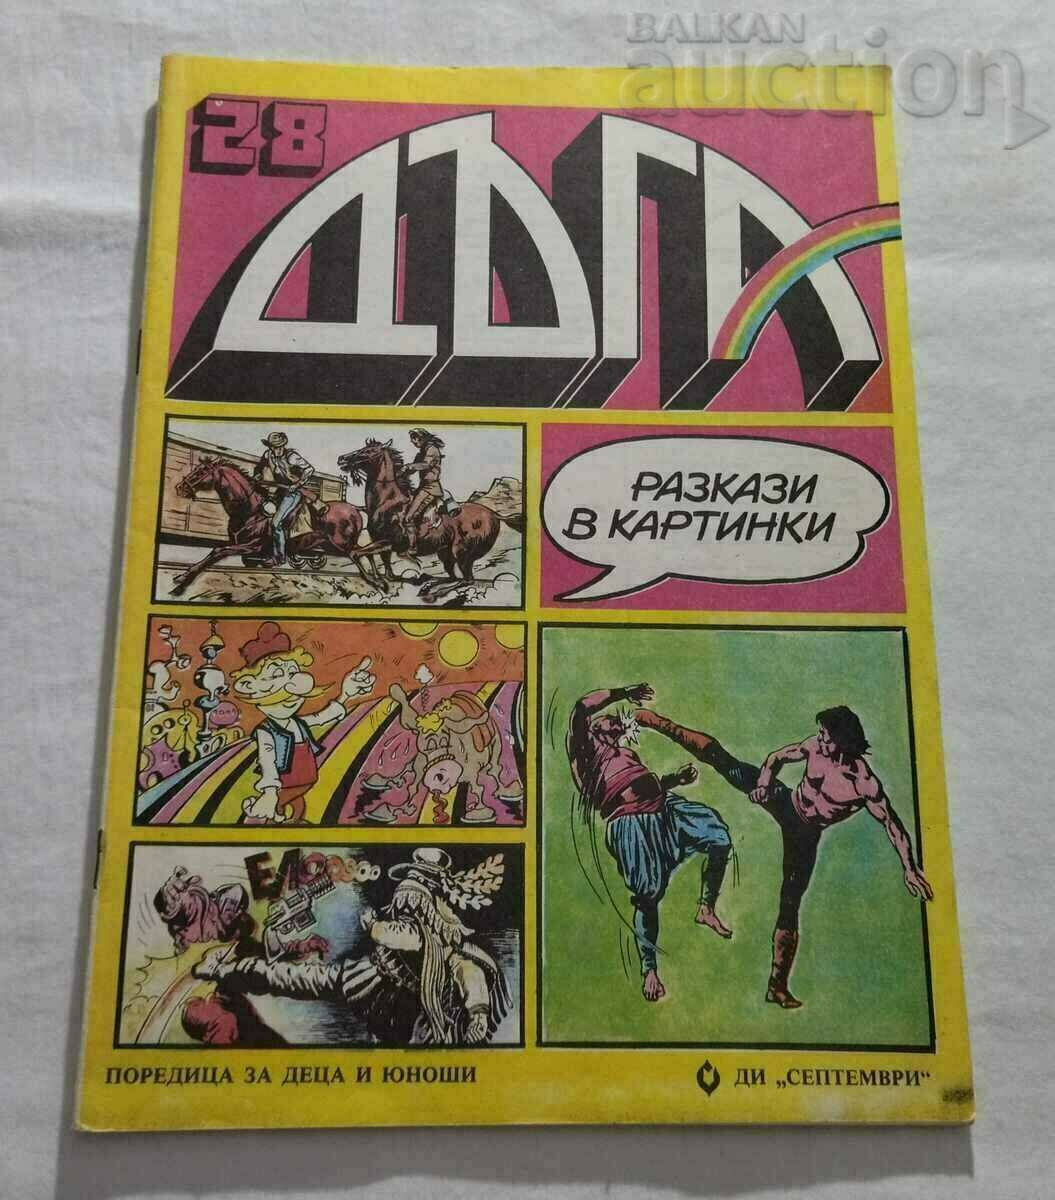 RAINBOW No. 28 1987. MAGAZINE FOR CHILDREN AND ADOLESCENTS